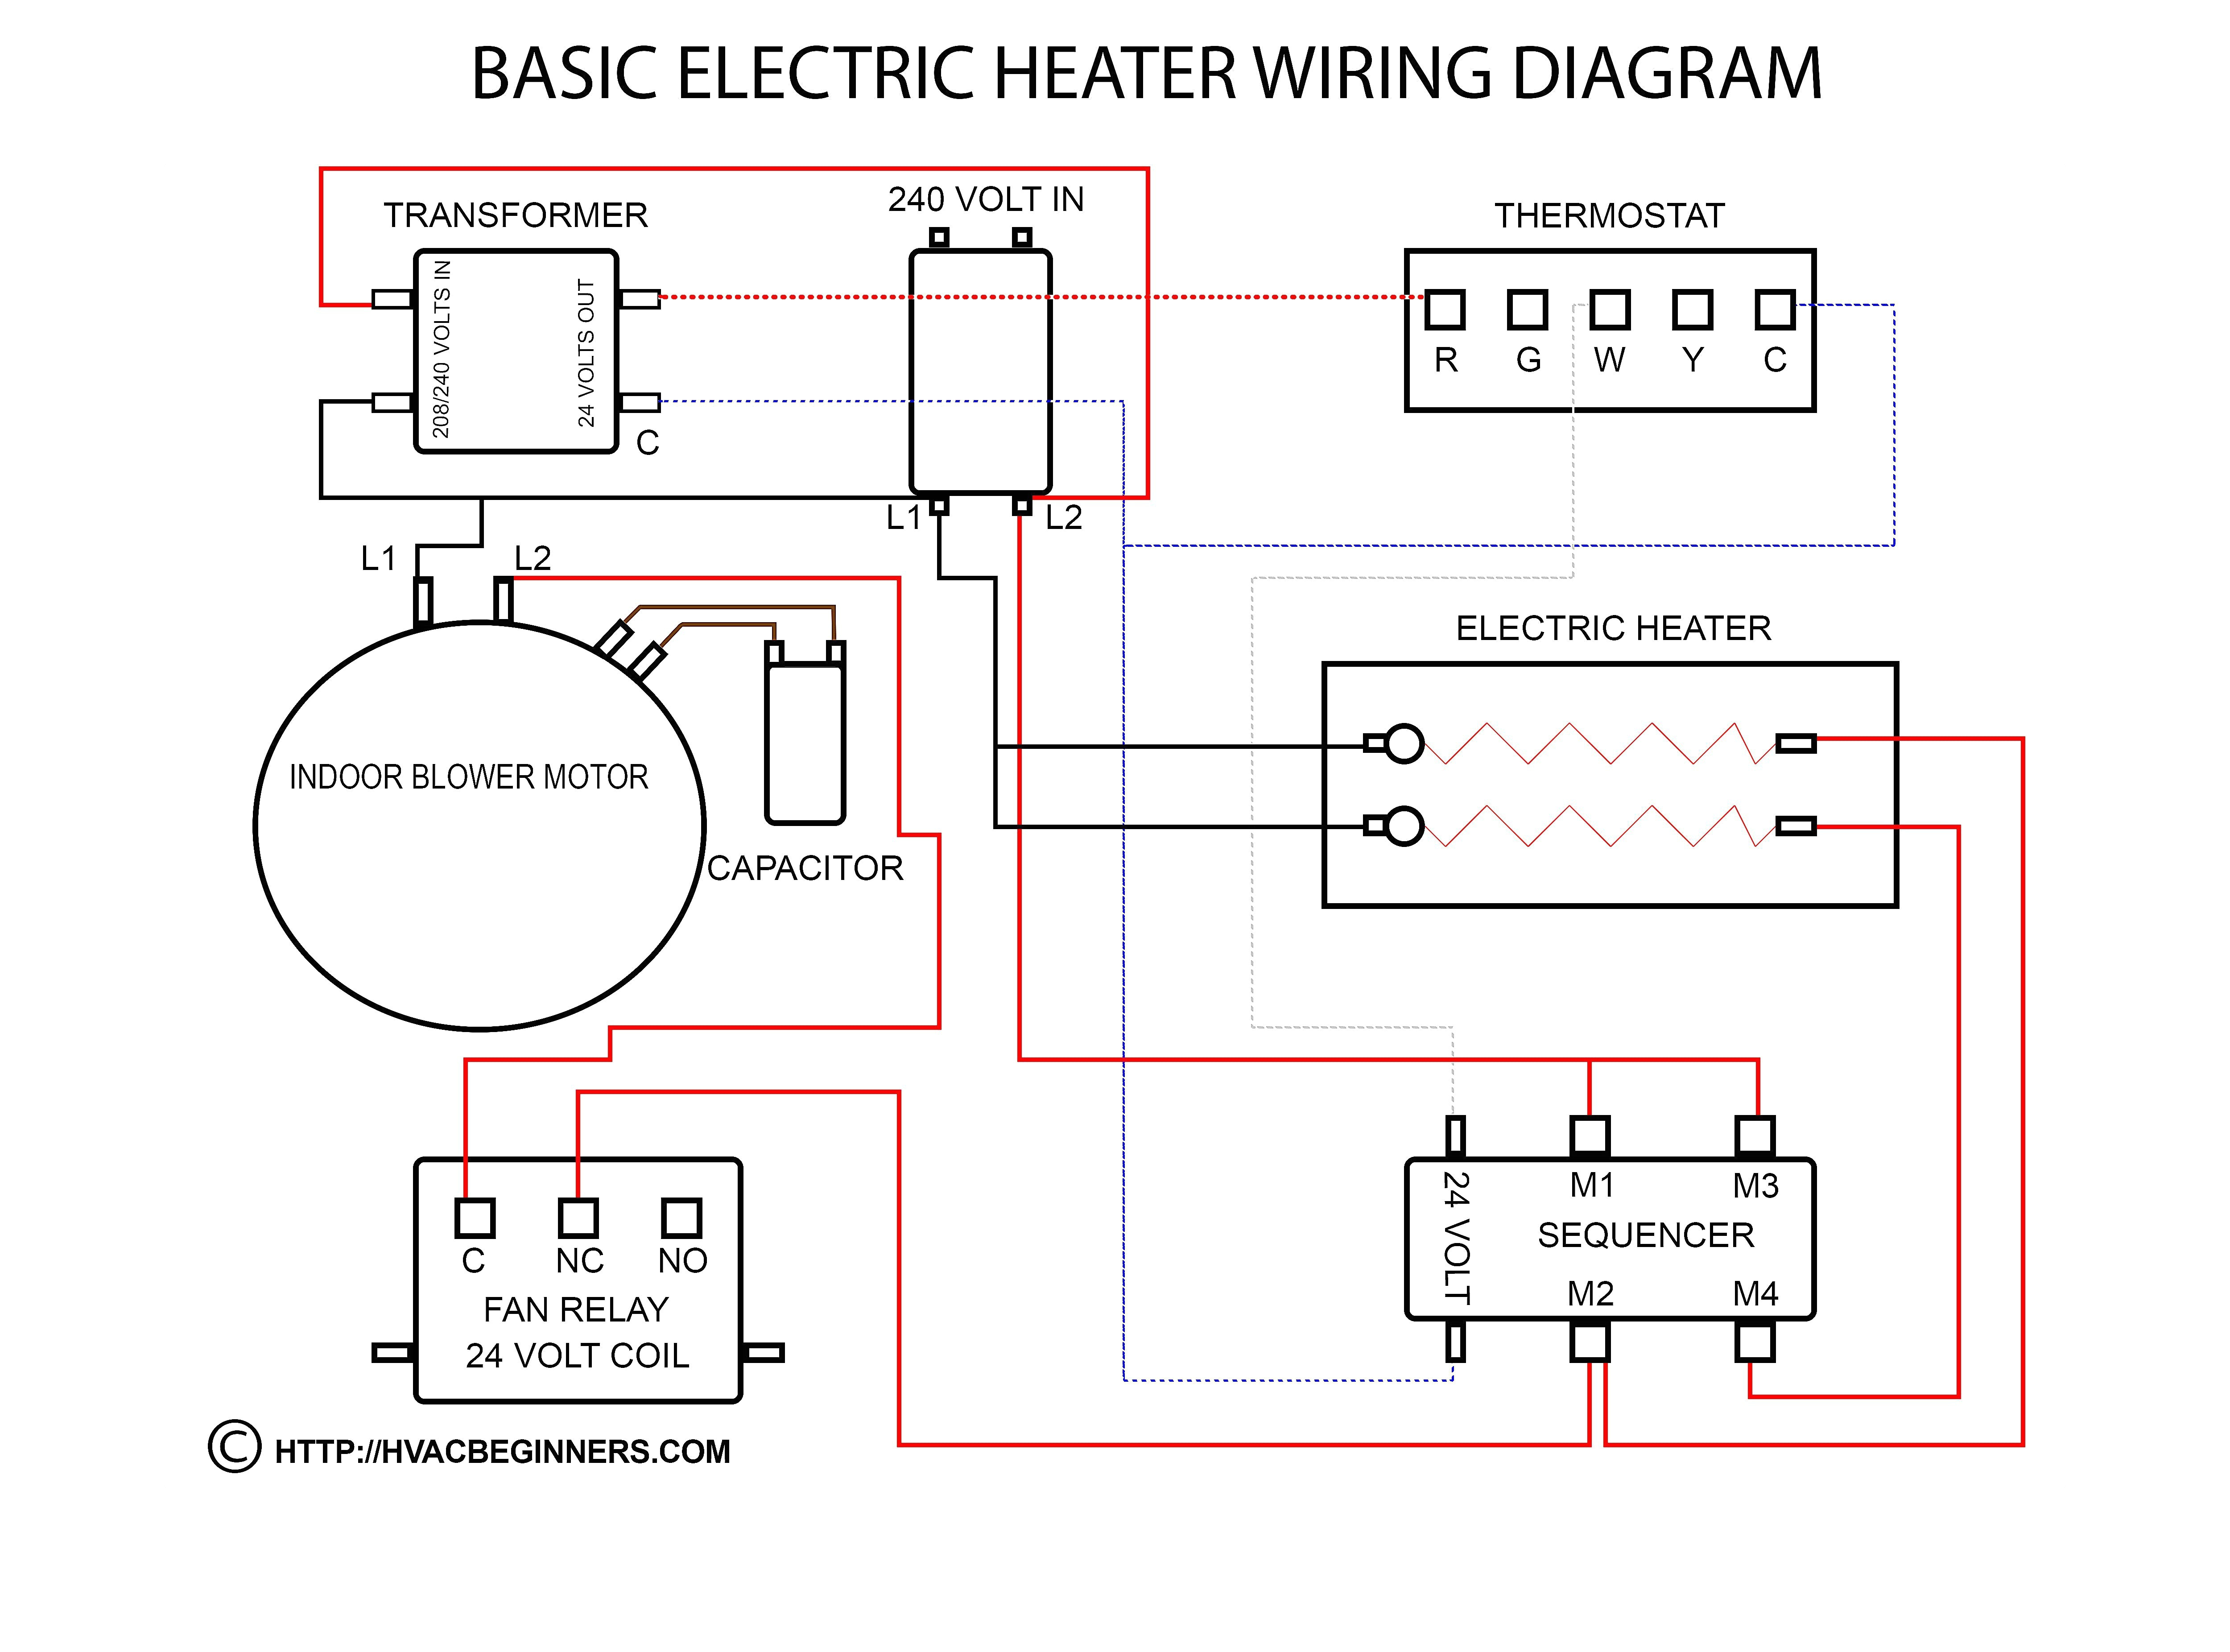 wiring diagram help wiring diagram insider wiring diagram help nastyz28com